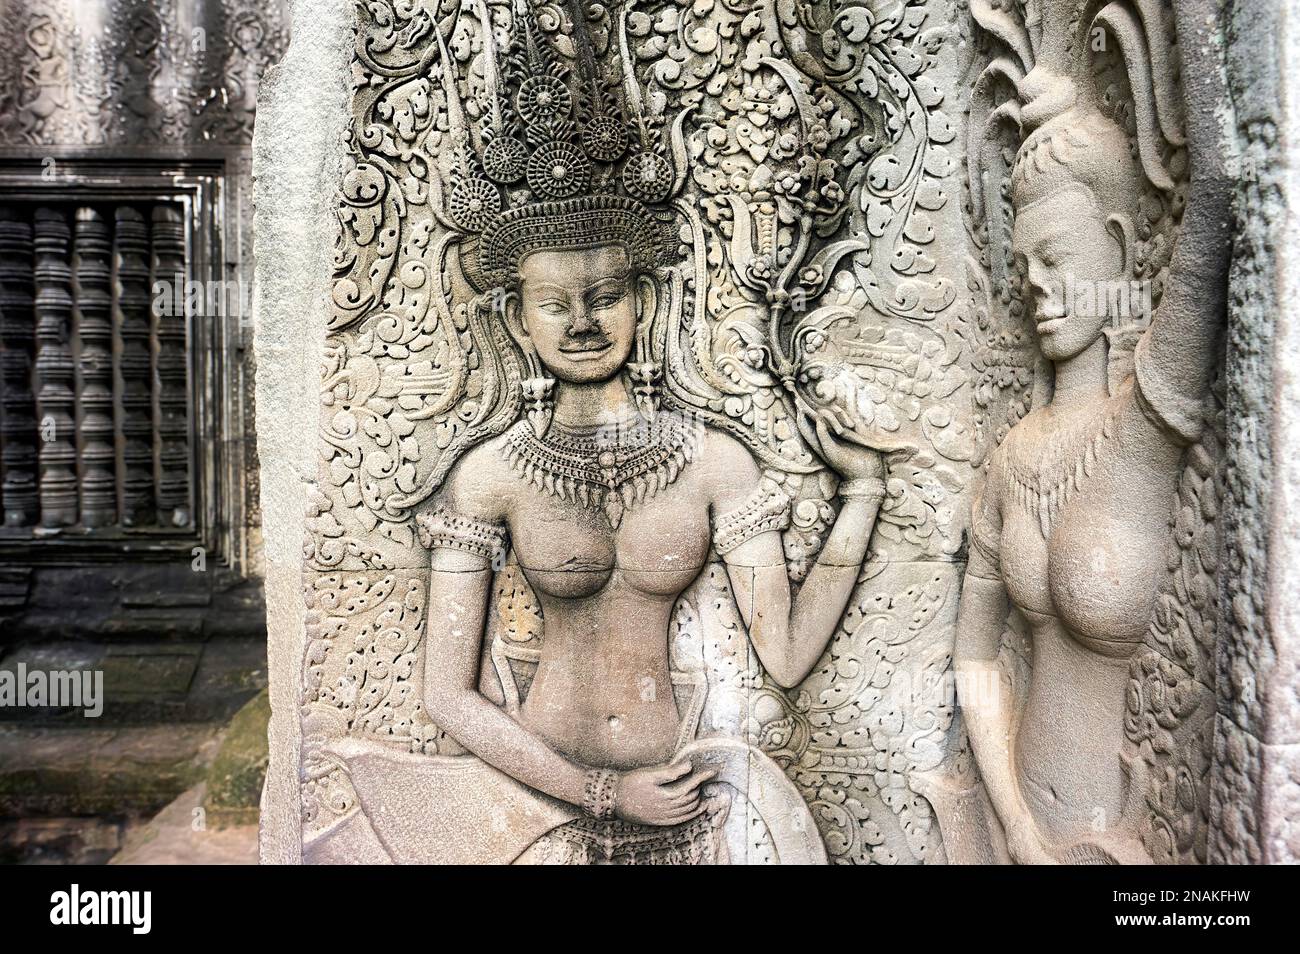 Bas relief depicting Apsara Dancers. Khmer culture, Angkor Wat, Siem Reap, Cambodia Stock Photo